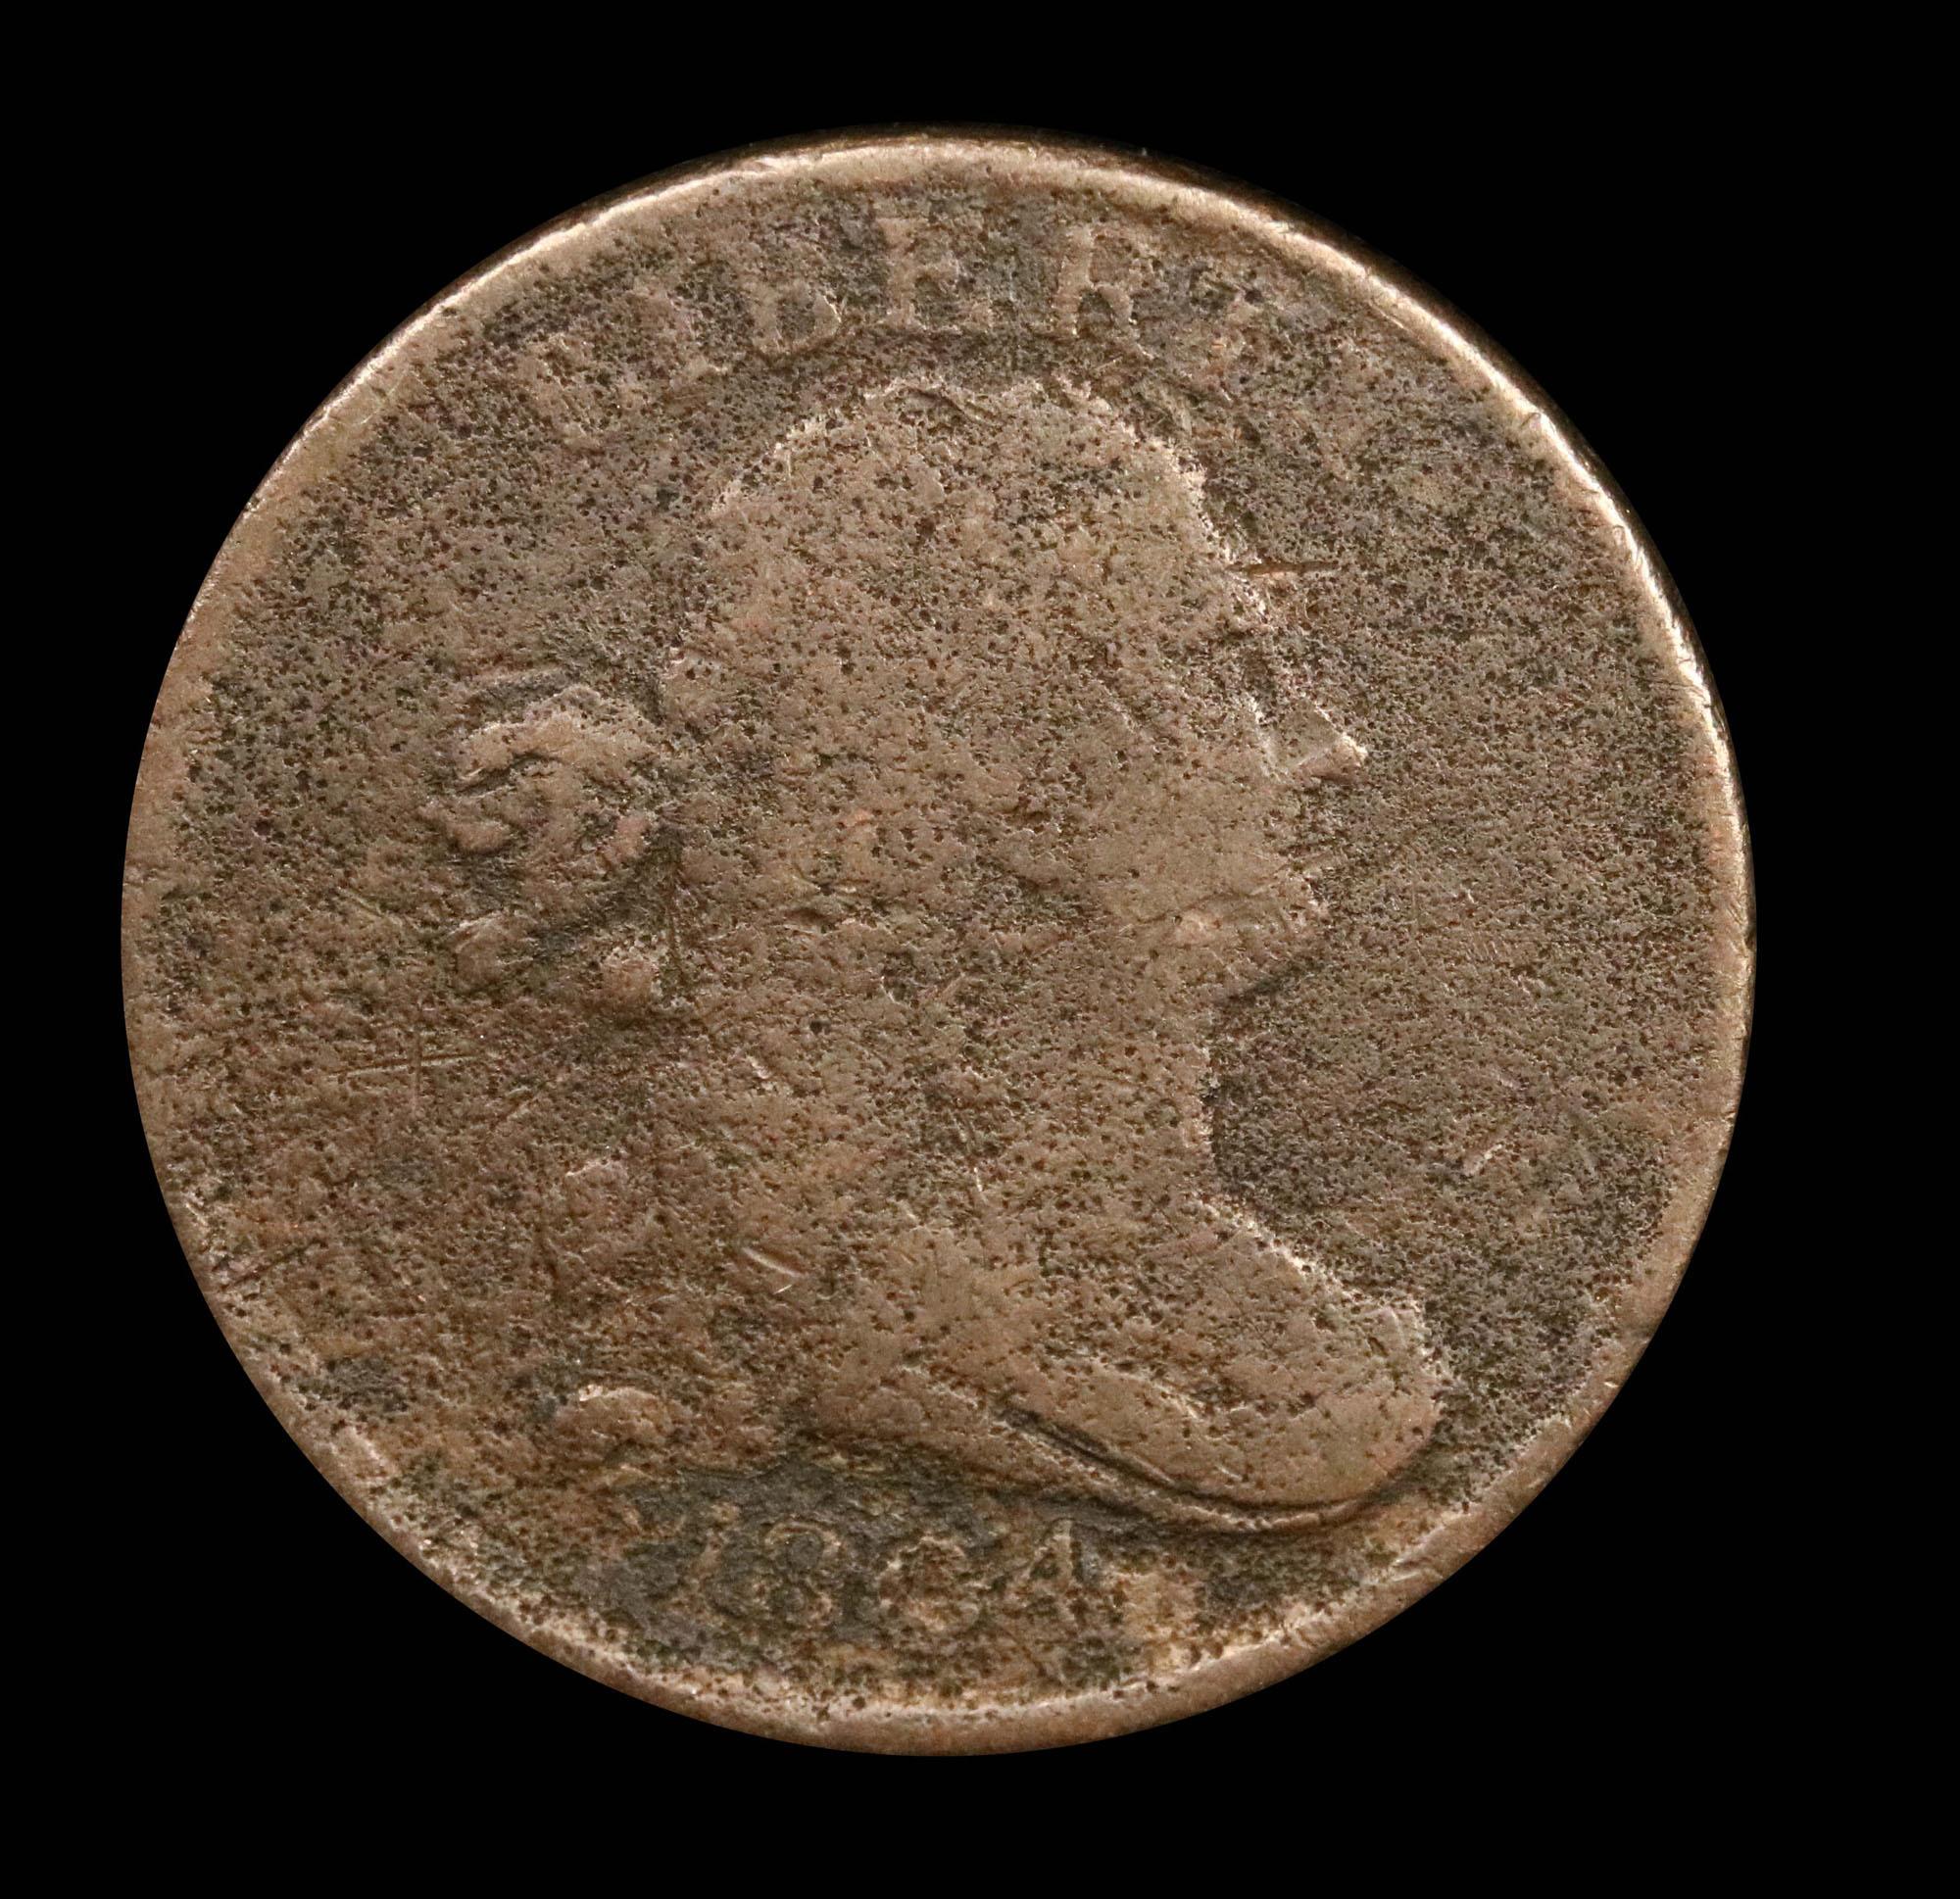 1804 Draped Bust Half Cent 1/2c Grades f details